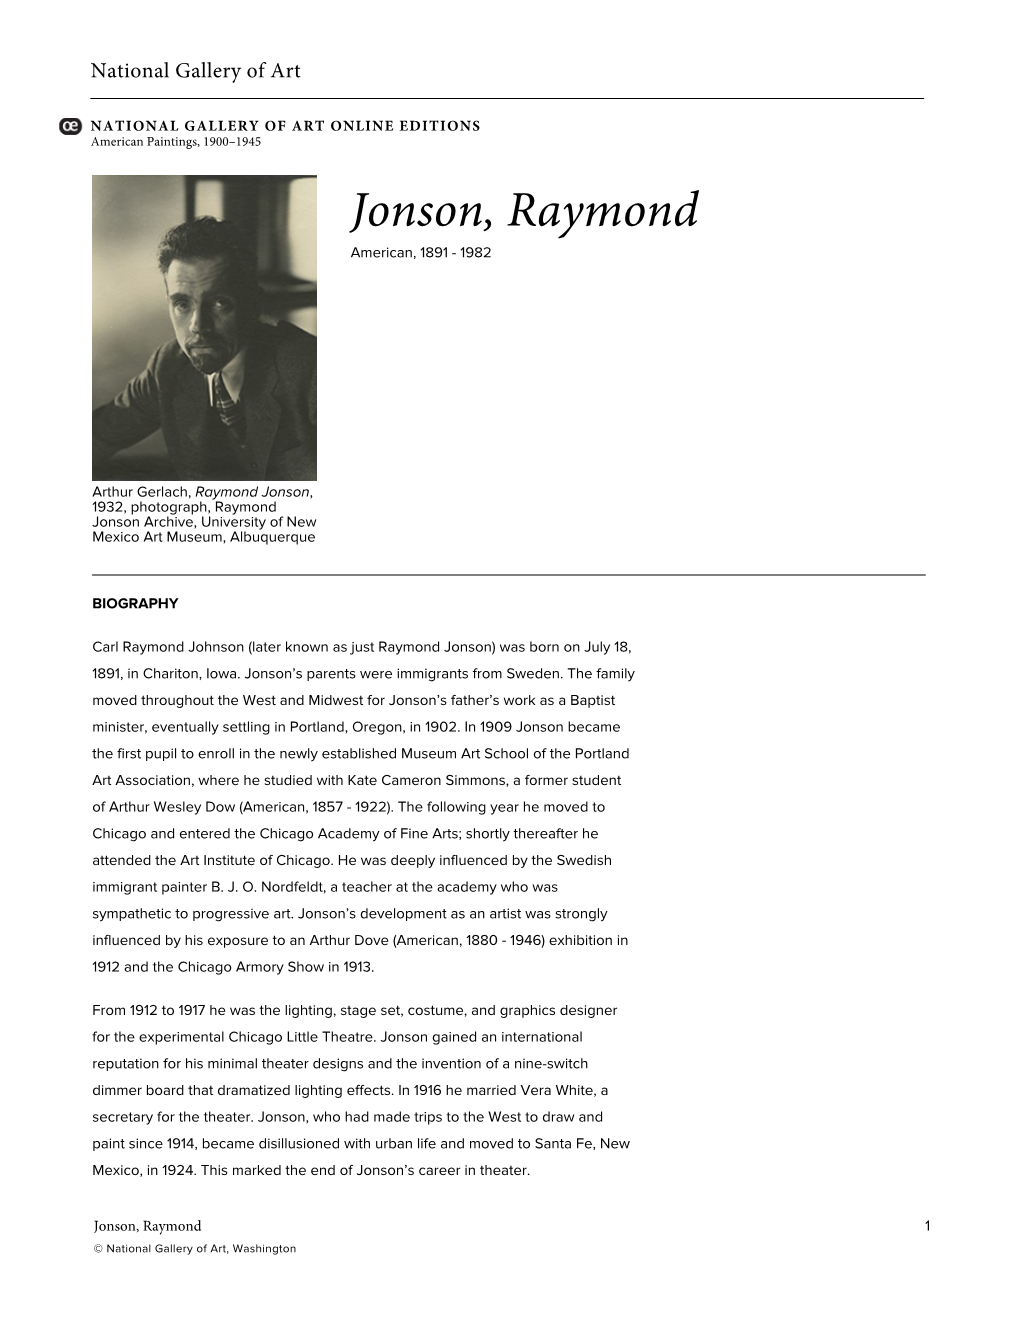 Jonson, Raymond American, 1891 - 1982